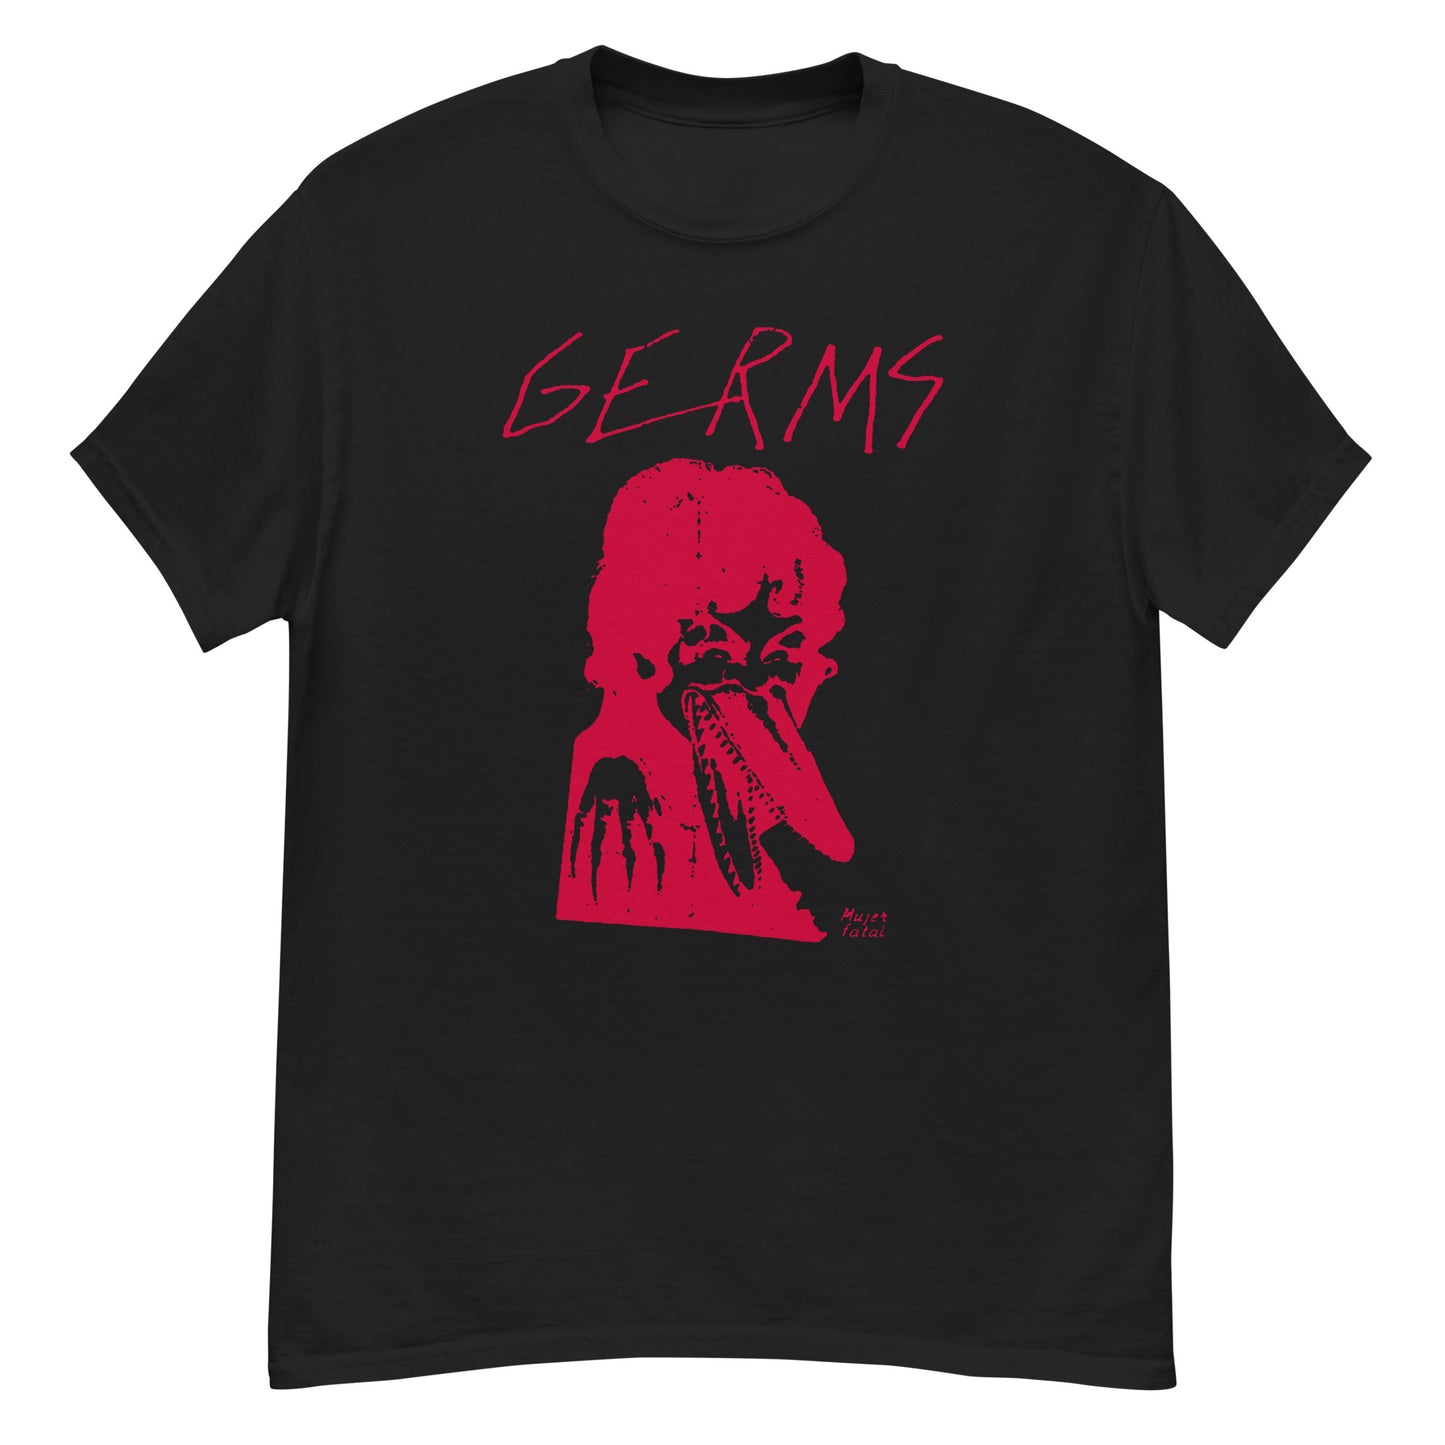 Germs T-Shirt